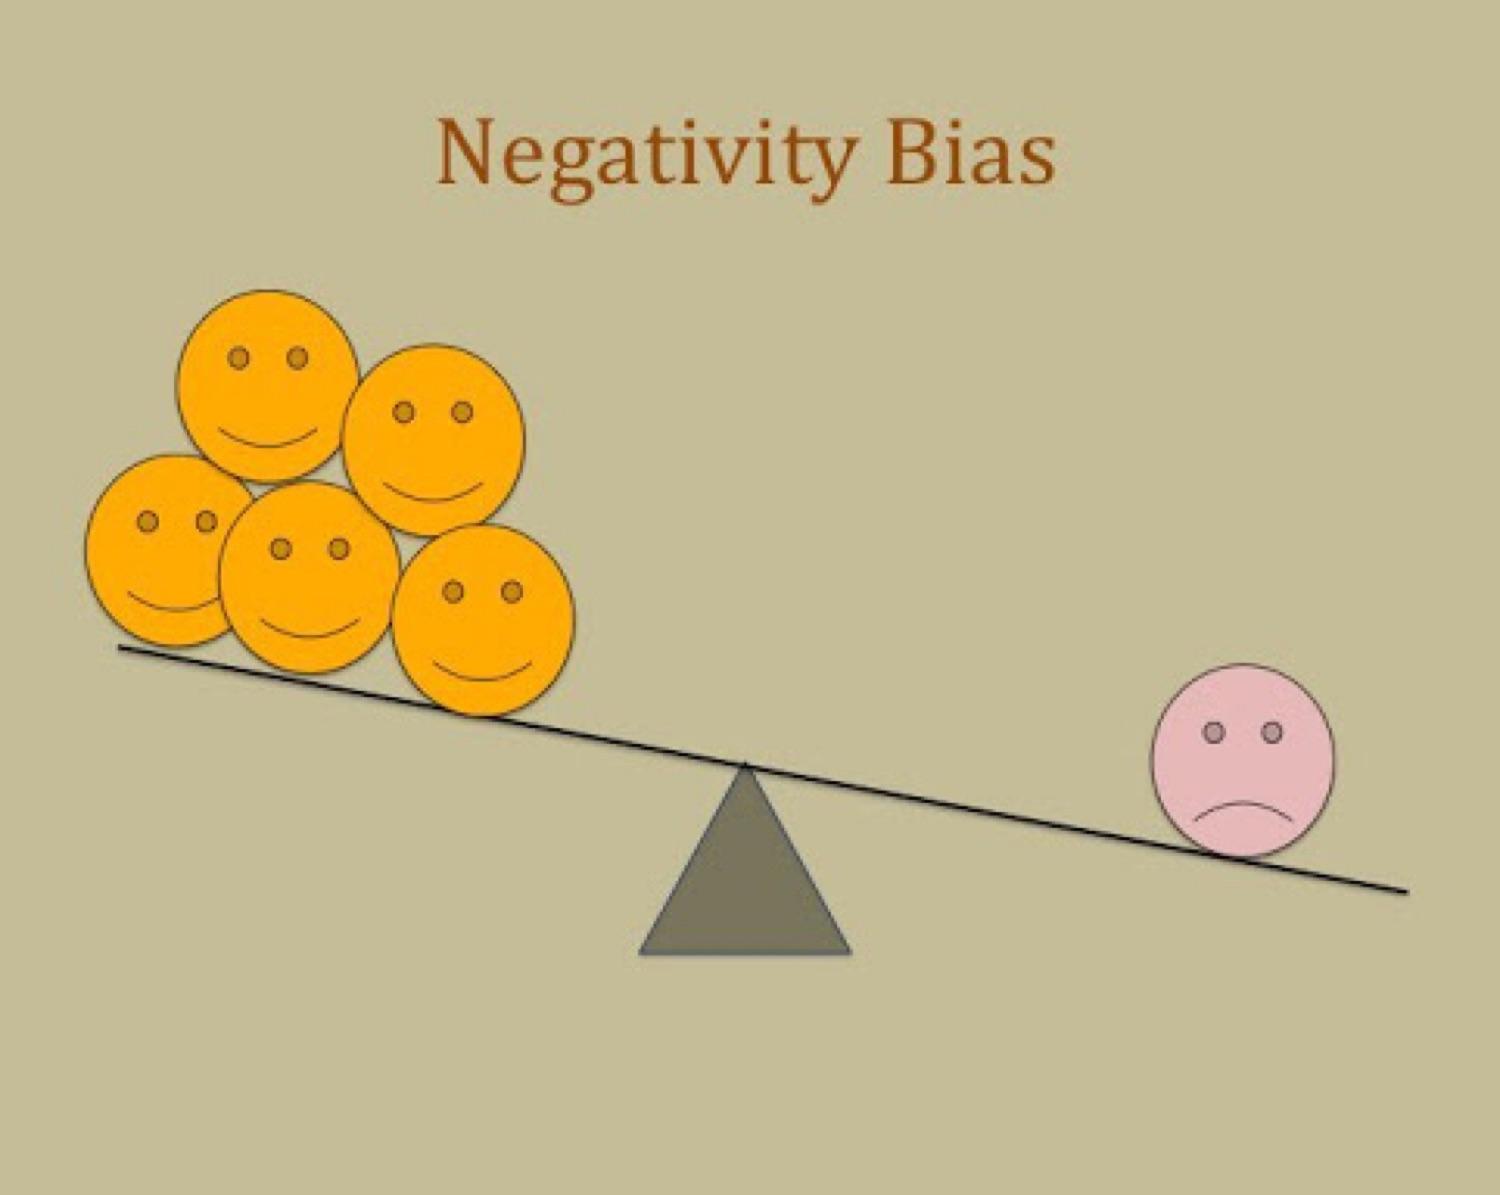 Negativity bias